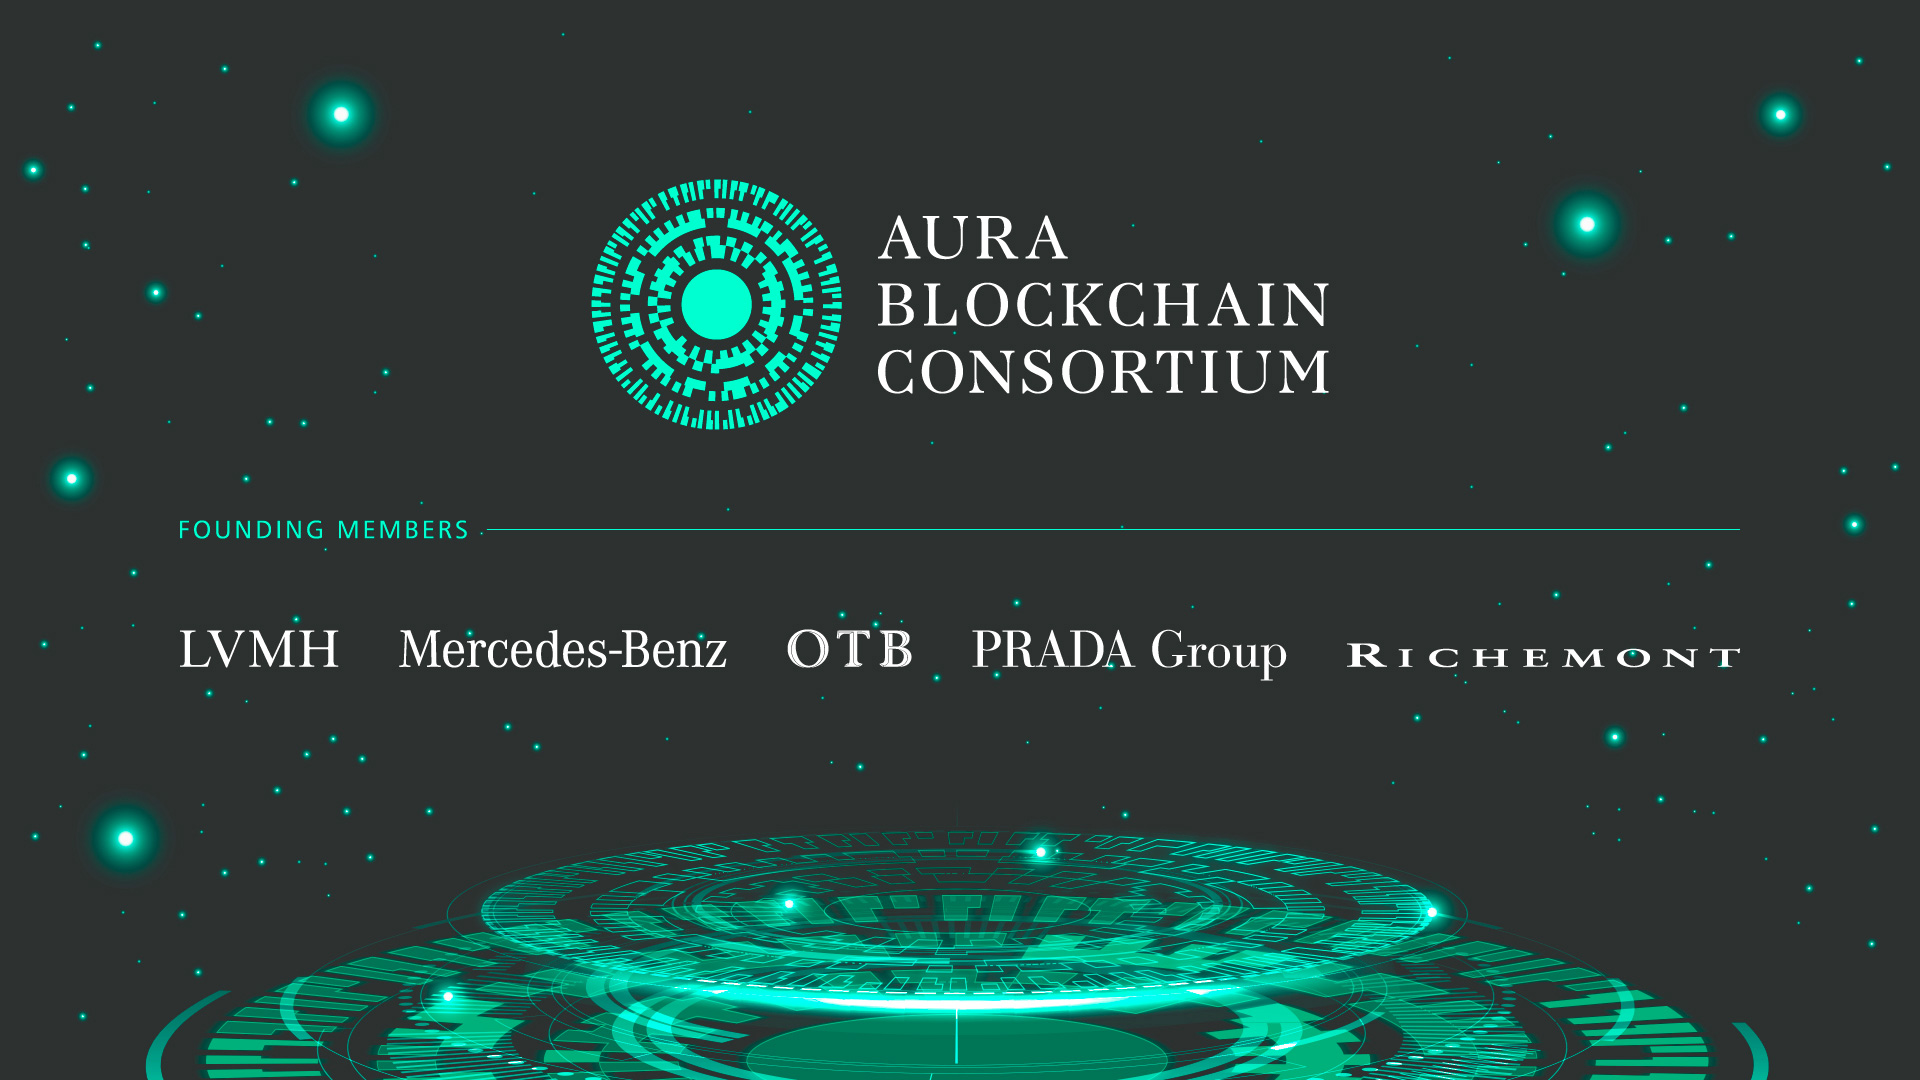 Aura Blockchain Consortium - Founding Members